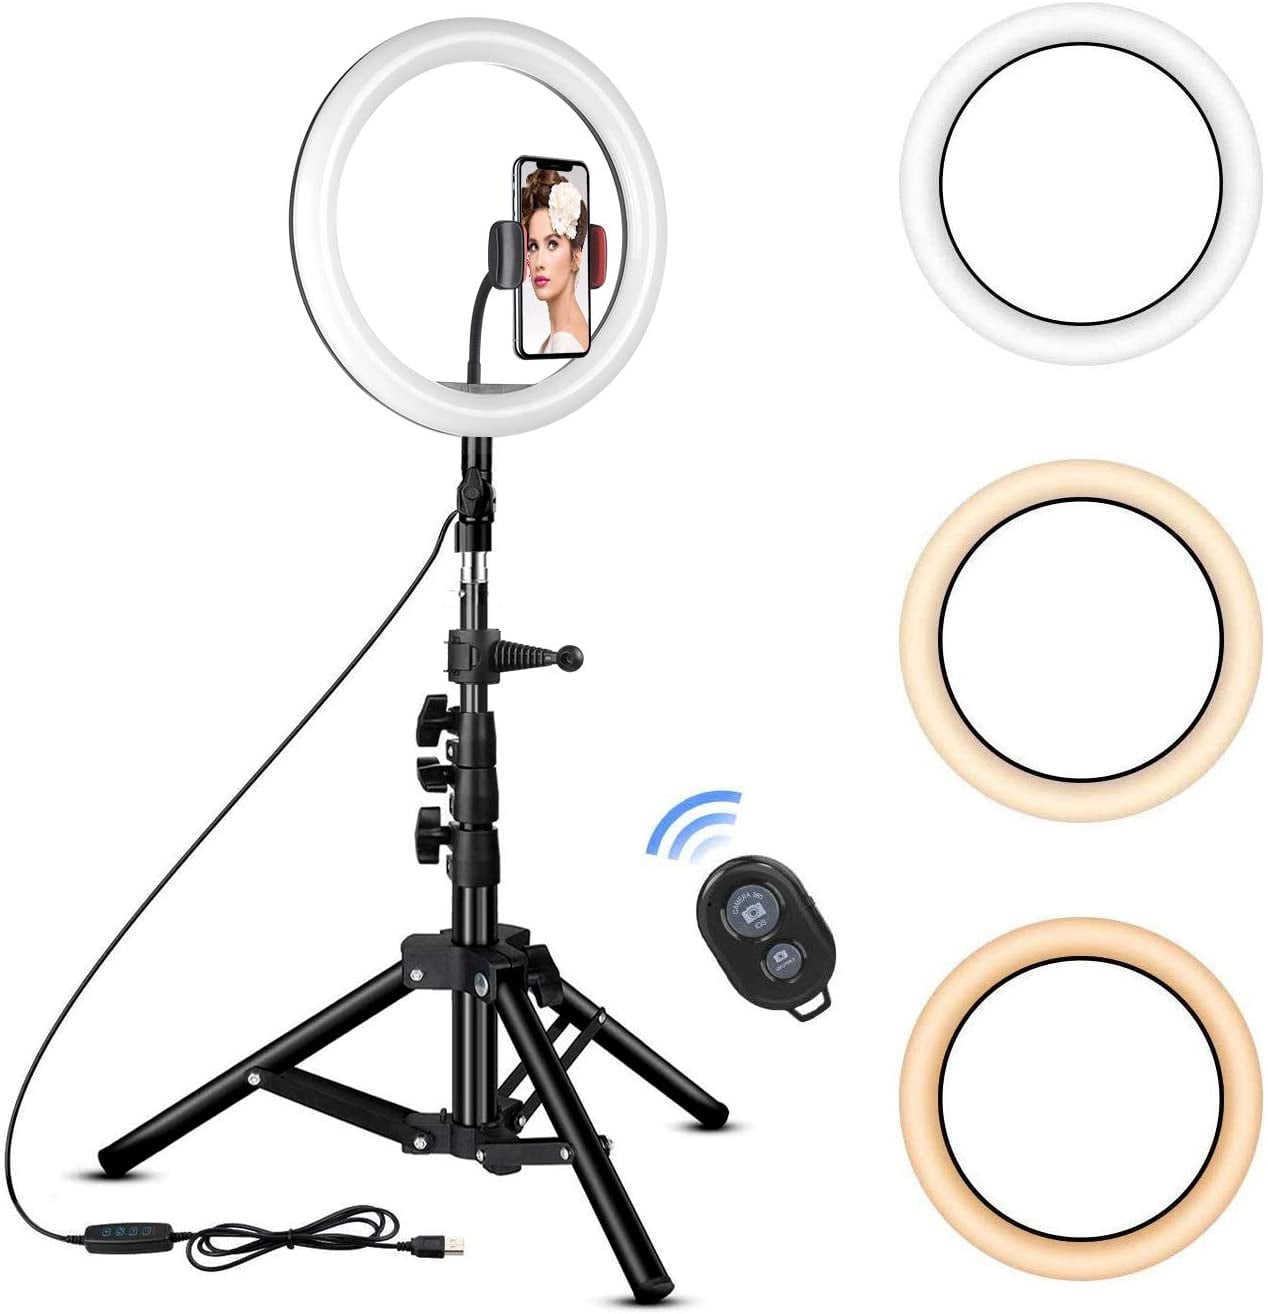 CODi ring light - LED-RING-6 - Camera & Video Accessories 